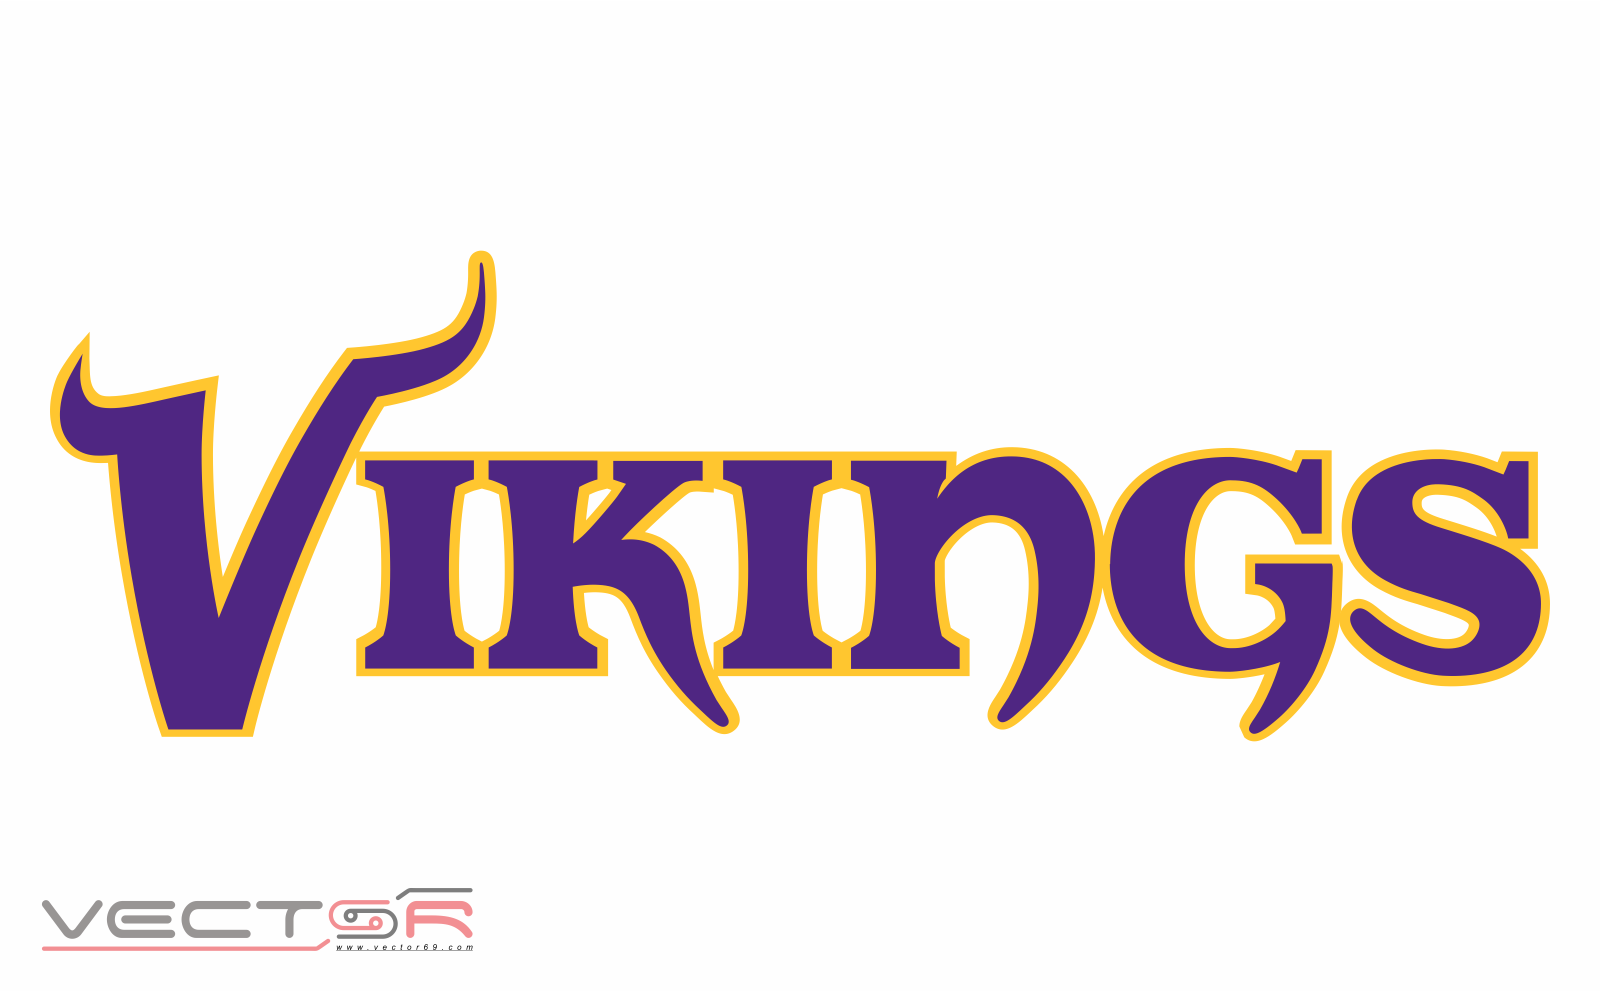 Minnesota Vikings Wordmark - Download Transparent Images, Portable Network Graphics (.PNG)